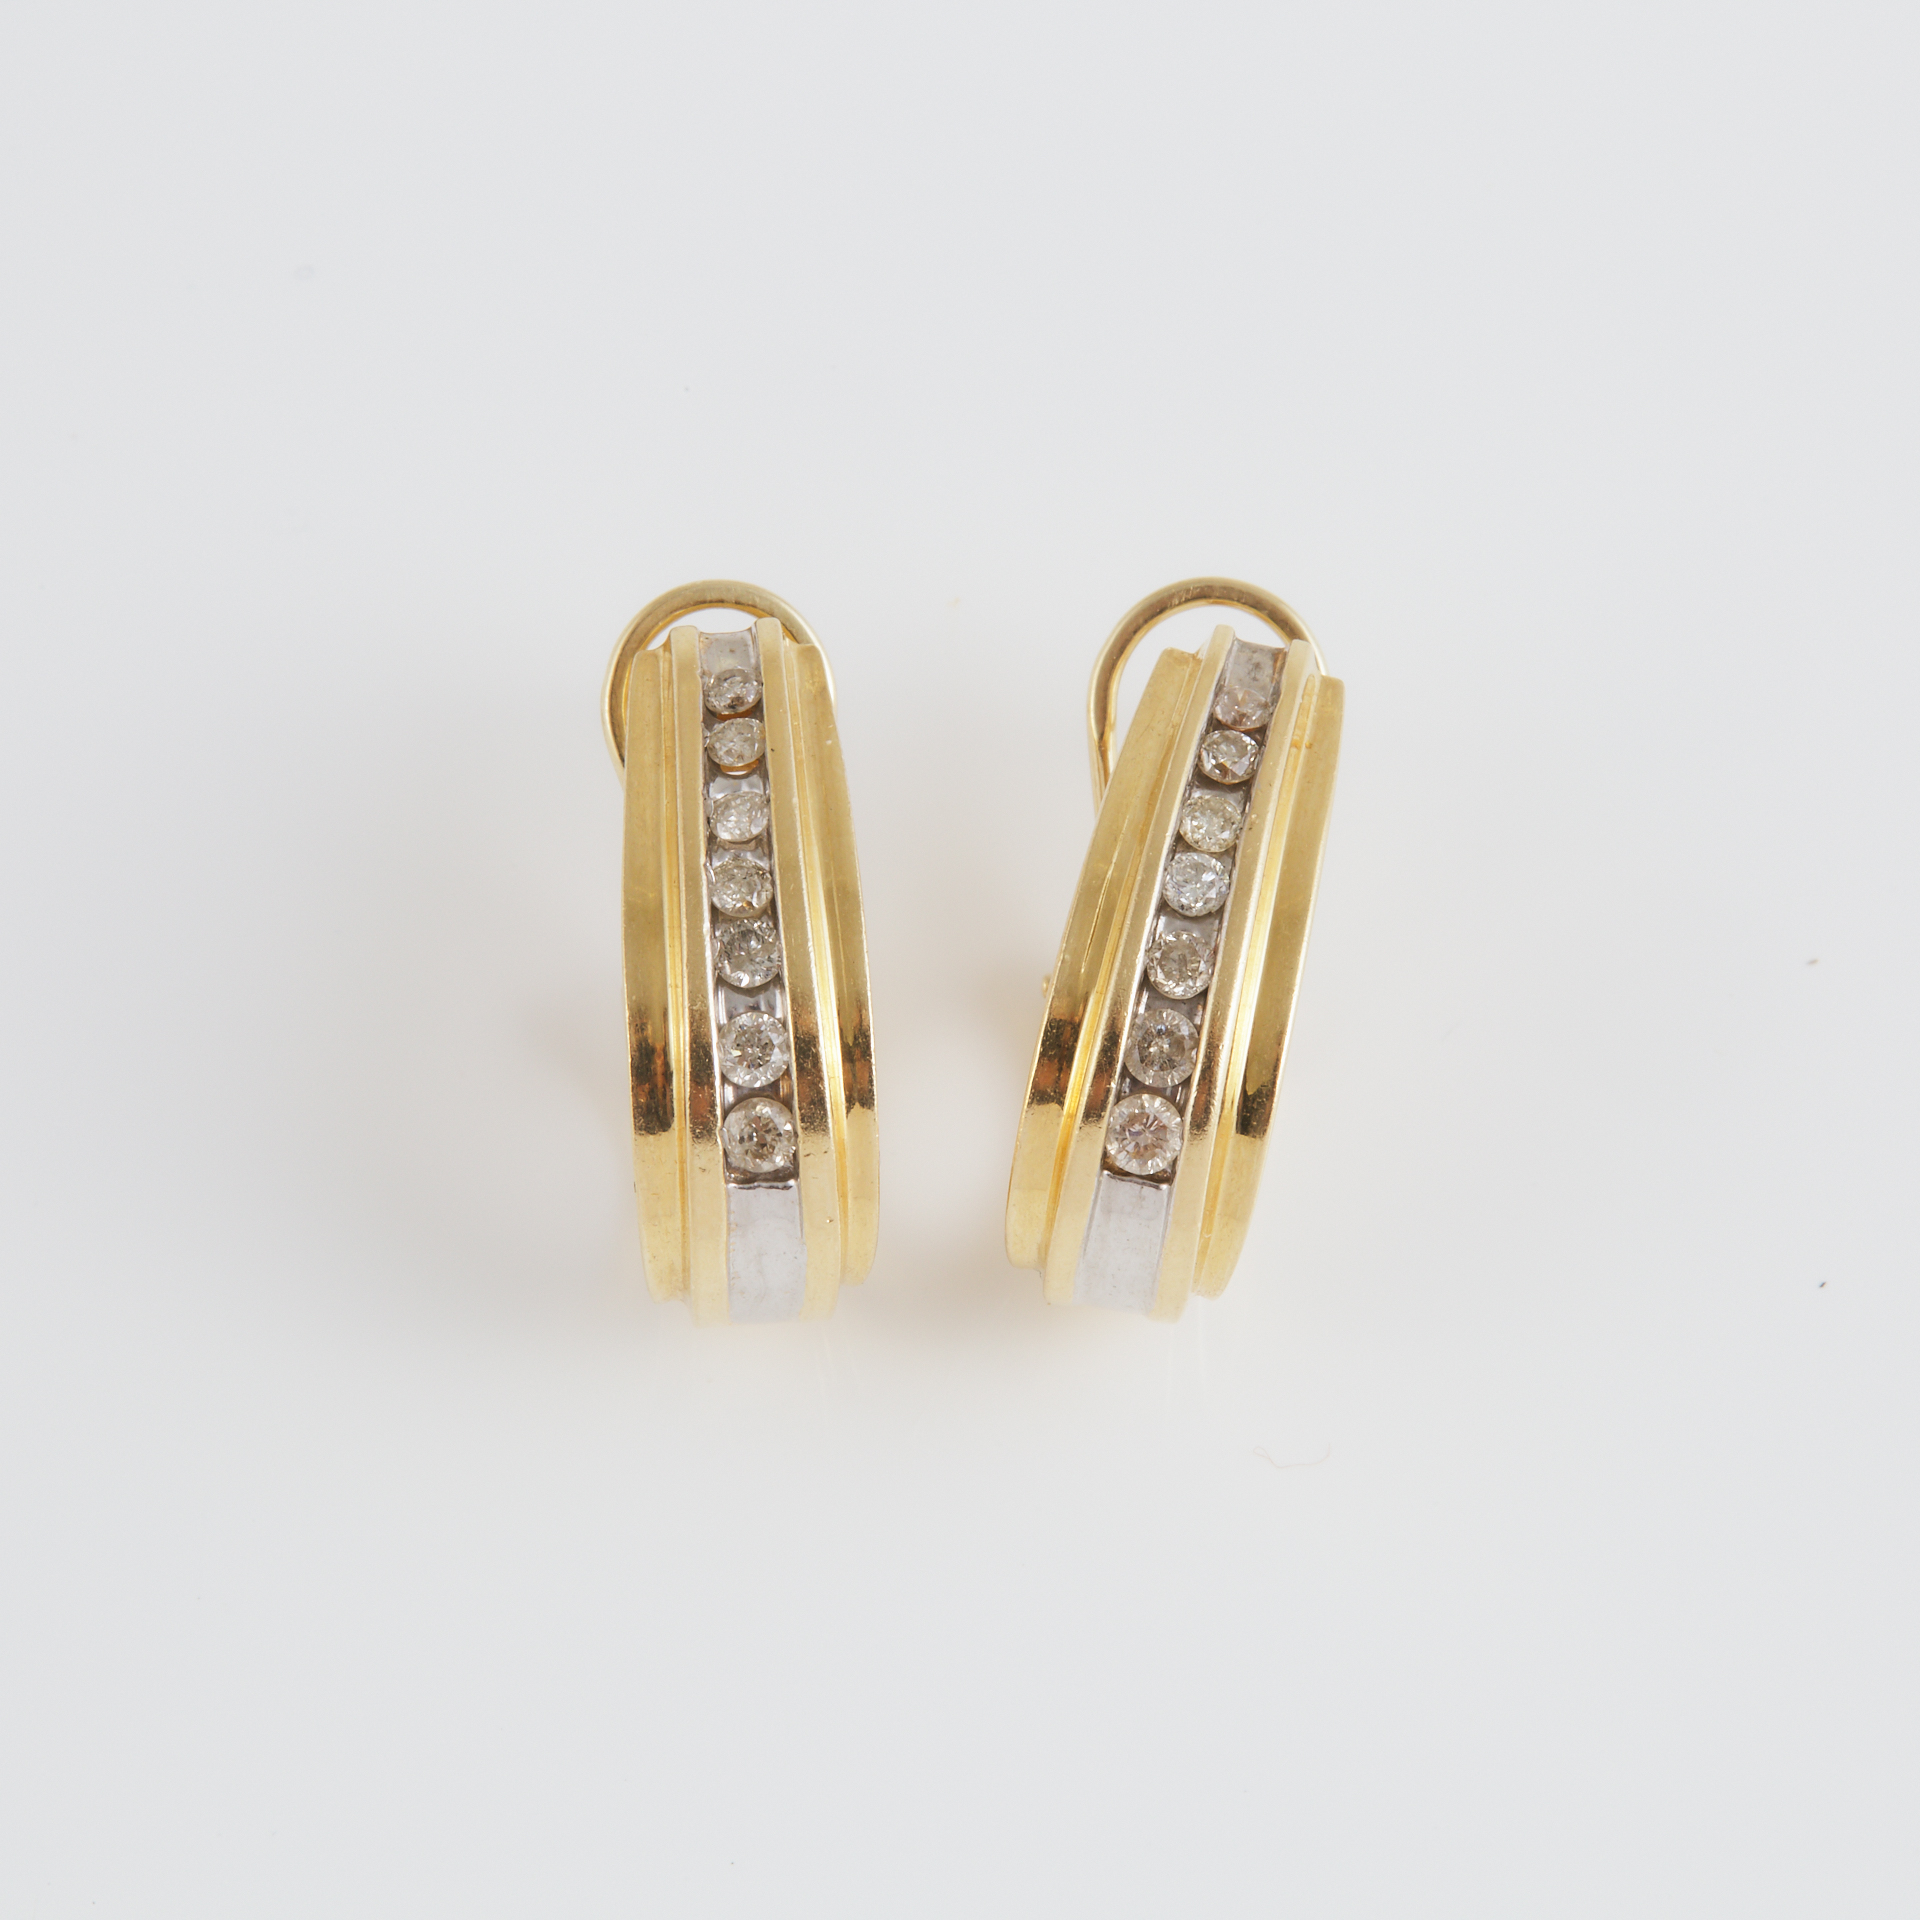 Pair Of 14k Yellow And White Gold Half Hoop Earrings